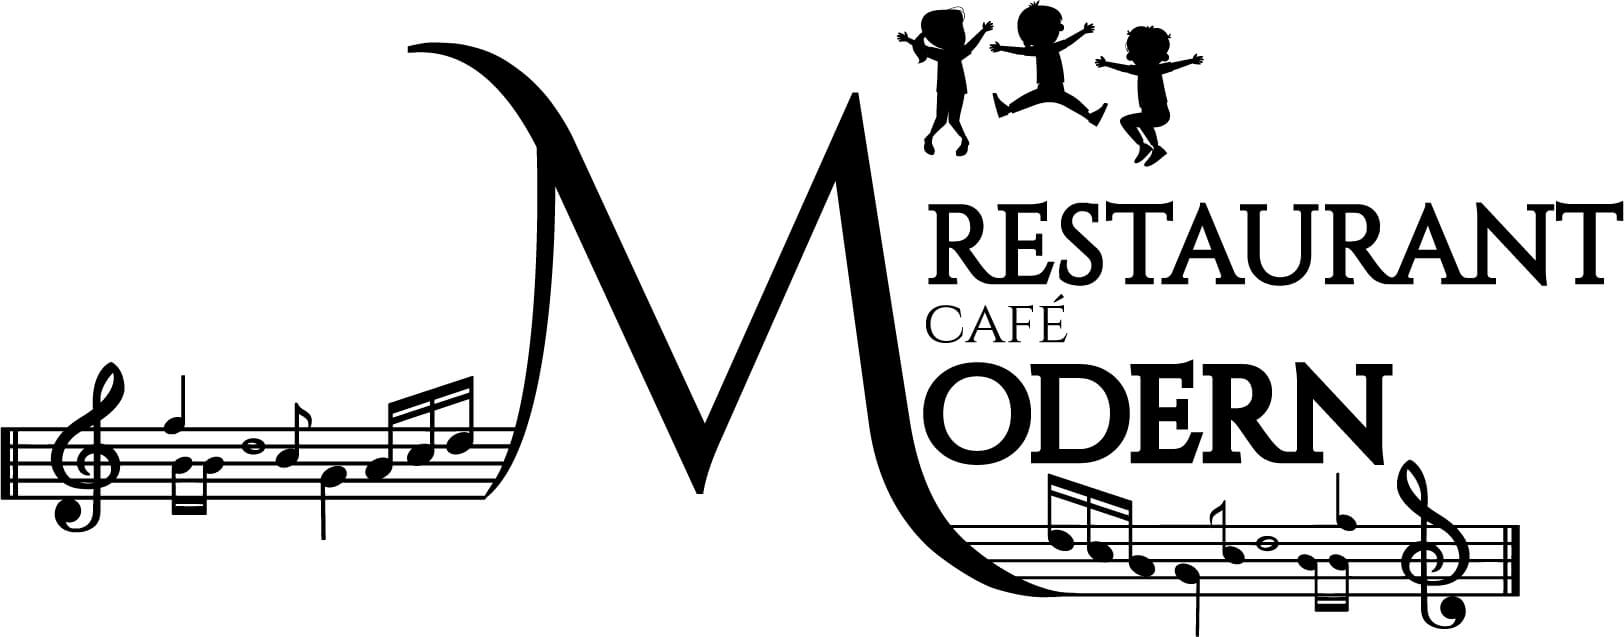 restaurant-cafe-modern